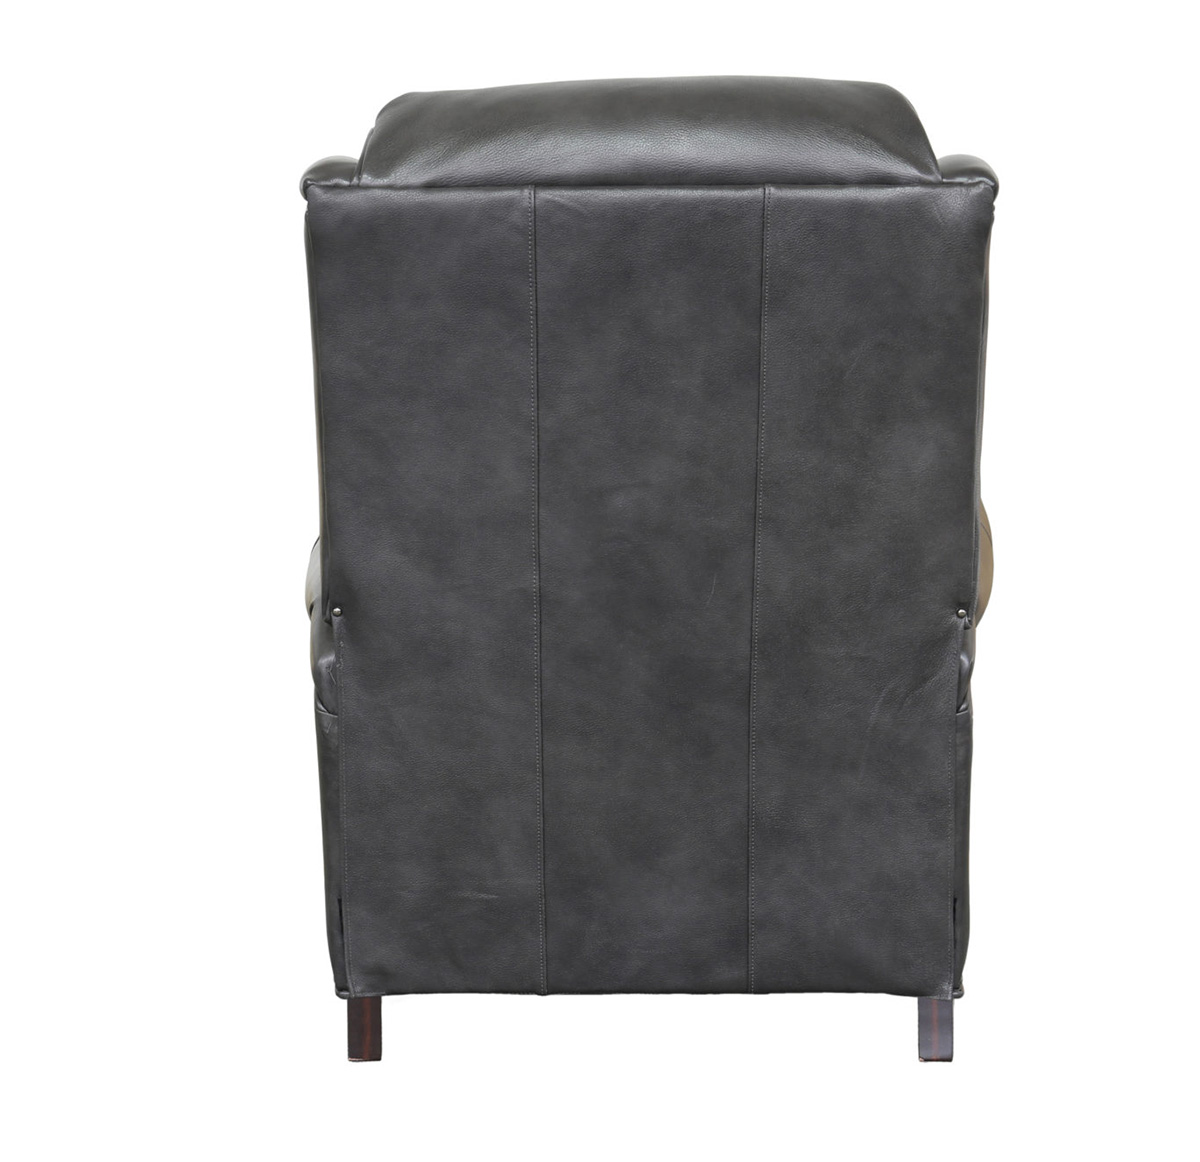 Barcalounger Meade Recliner Chair - Wrenn Gray/all leather